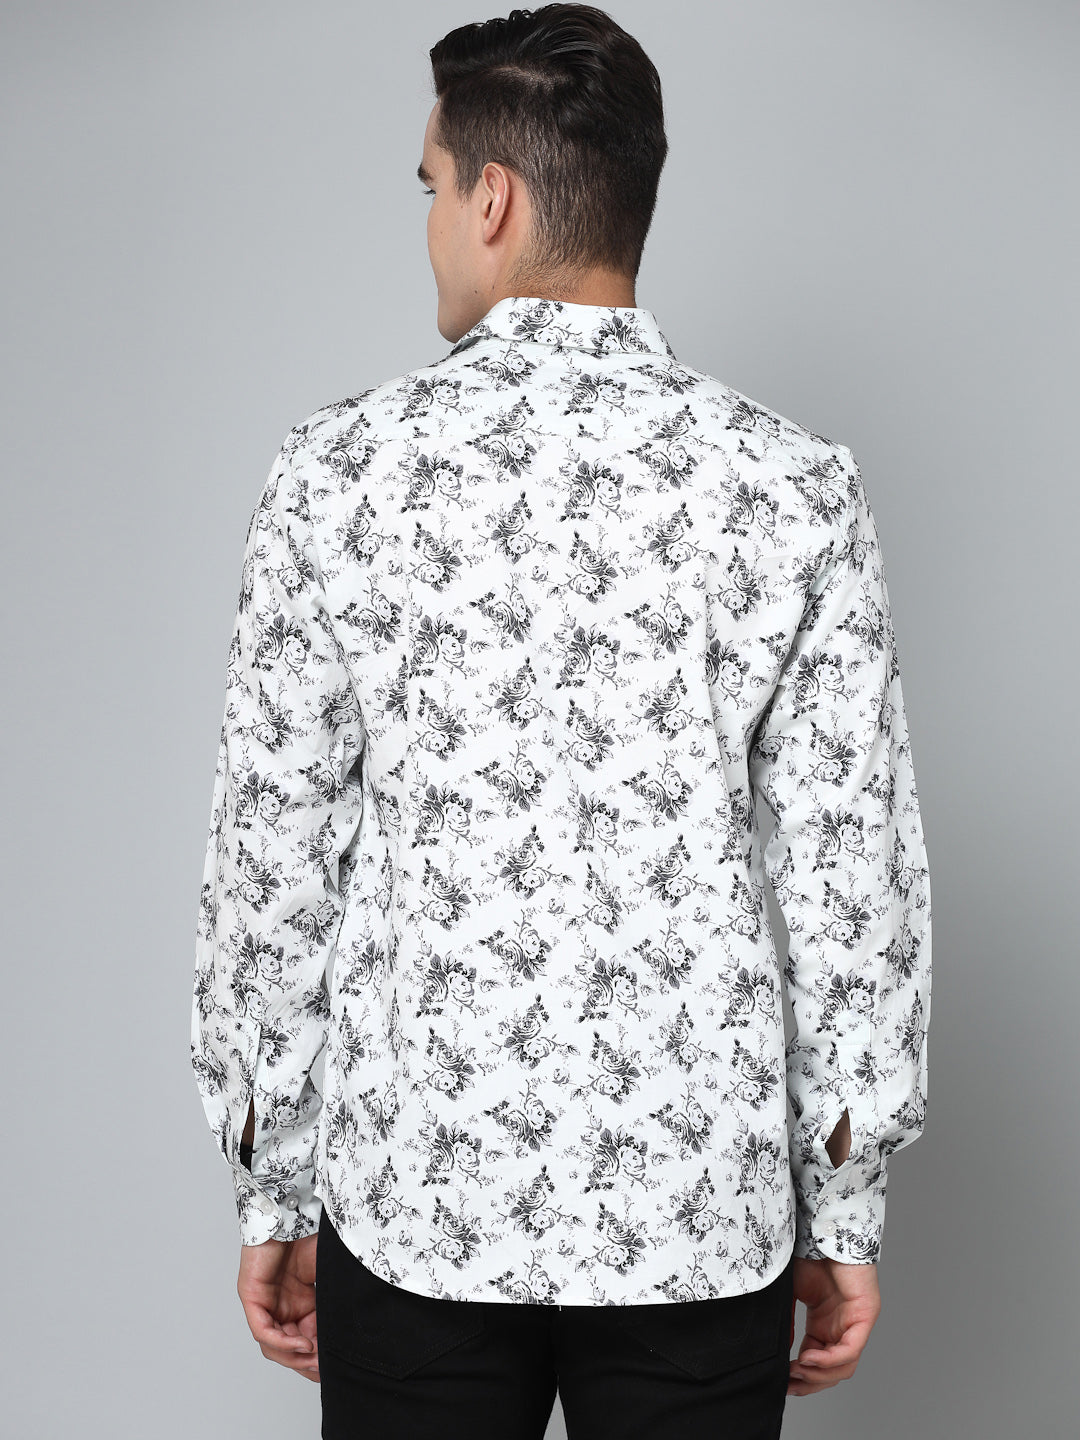 Valbone Men's Geometrical Printed Giza Cotton Casual Shirt